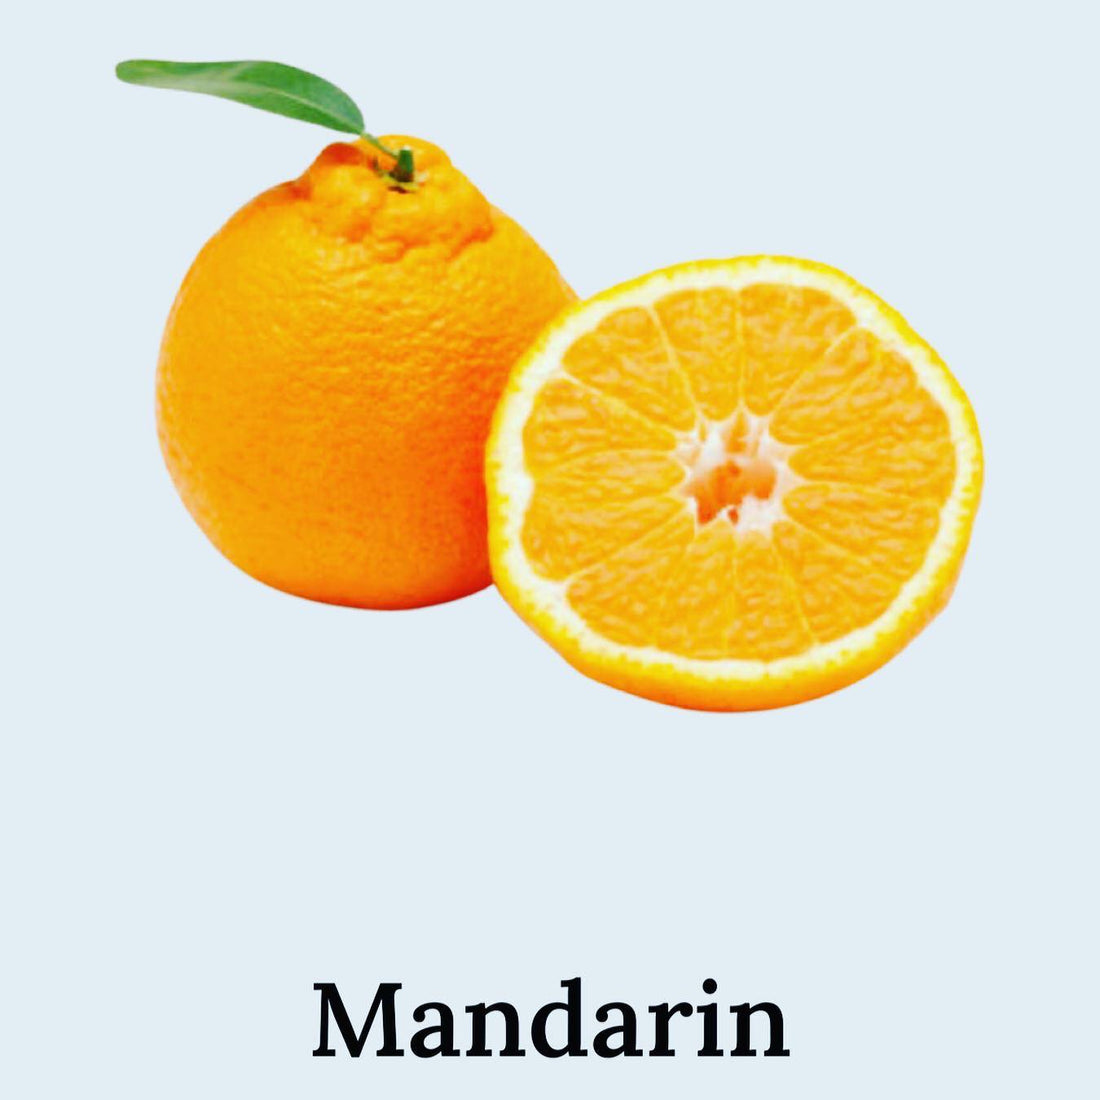 Mandarin oil